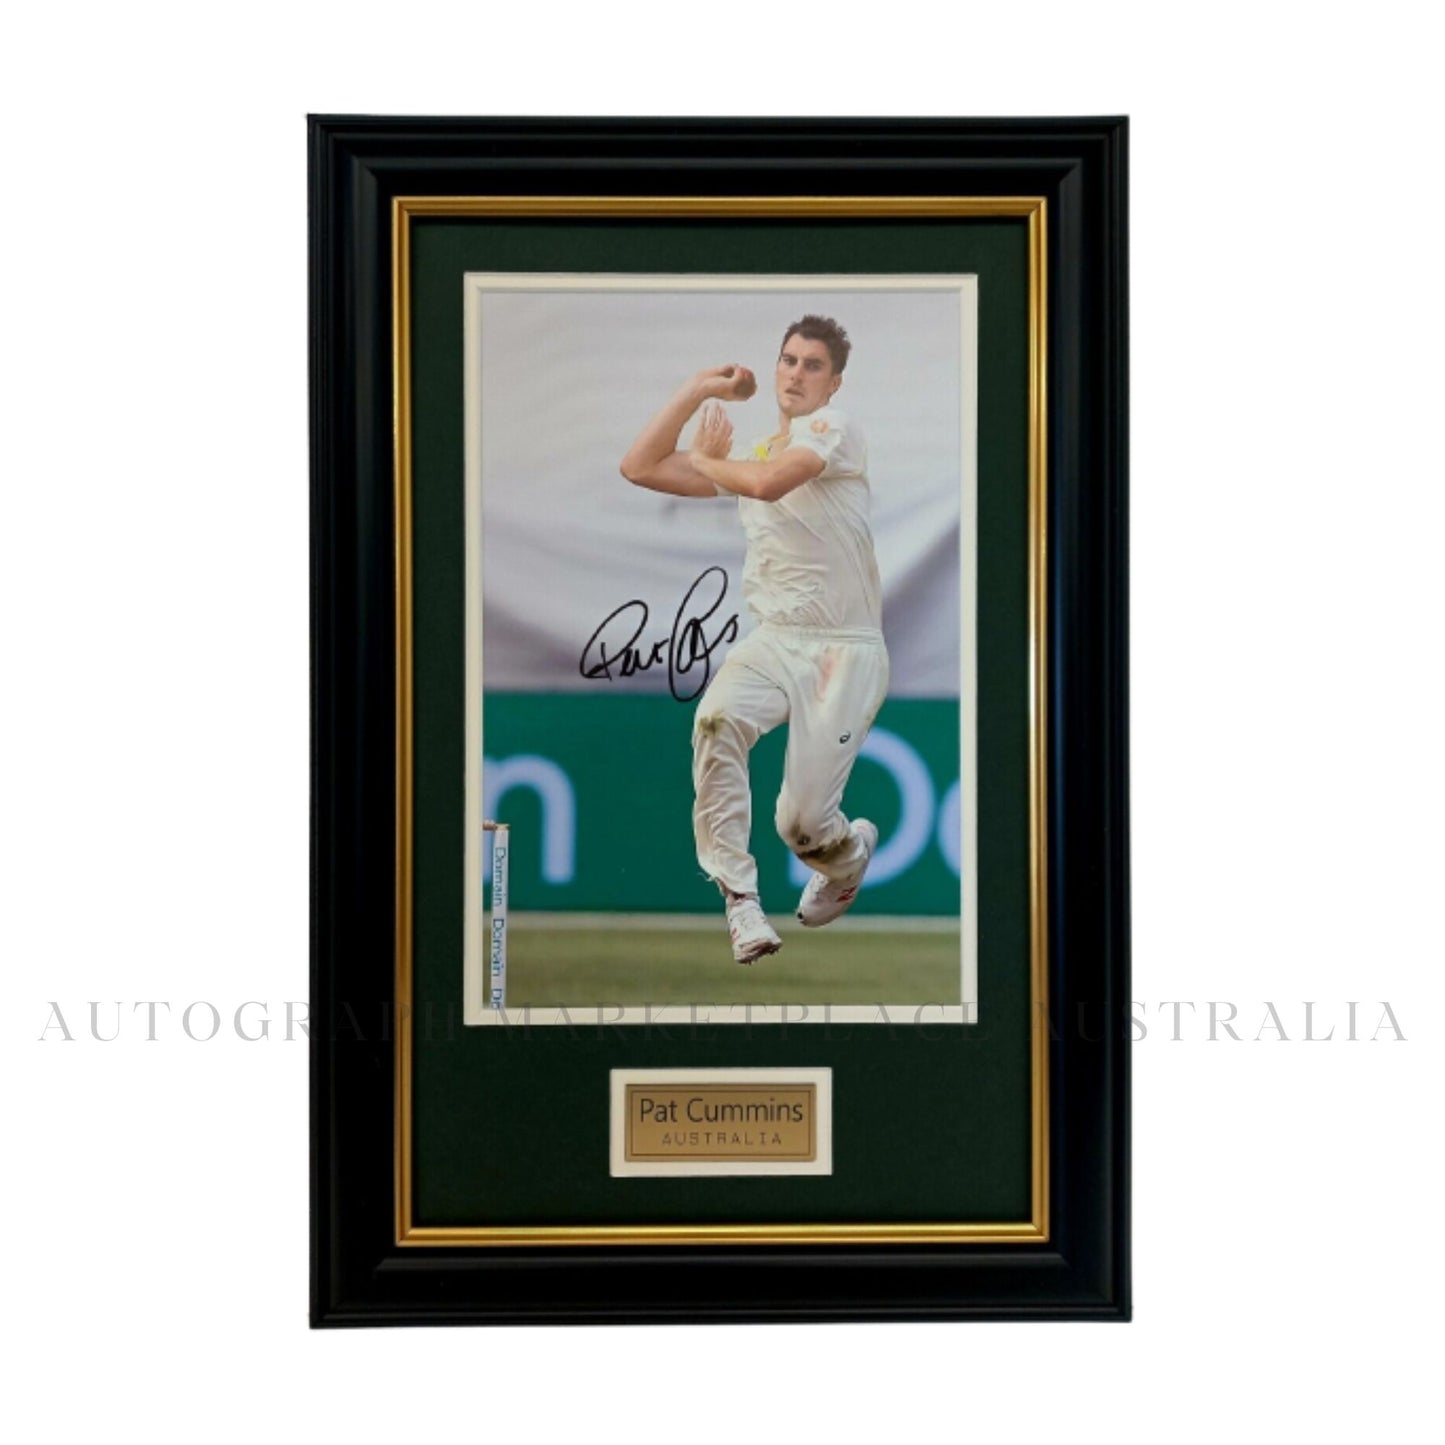 Exclusive Pat Cummins Autographed Cricket Australia Memorabilia - Limited Edition Framed Collection